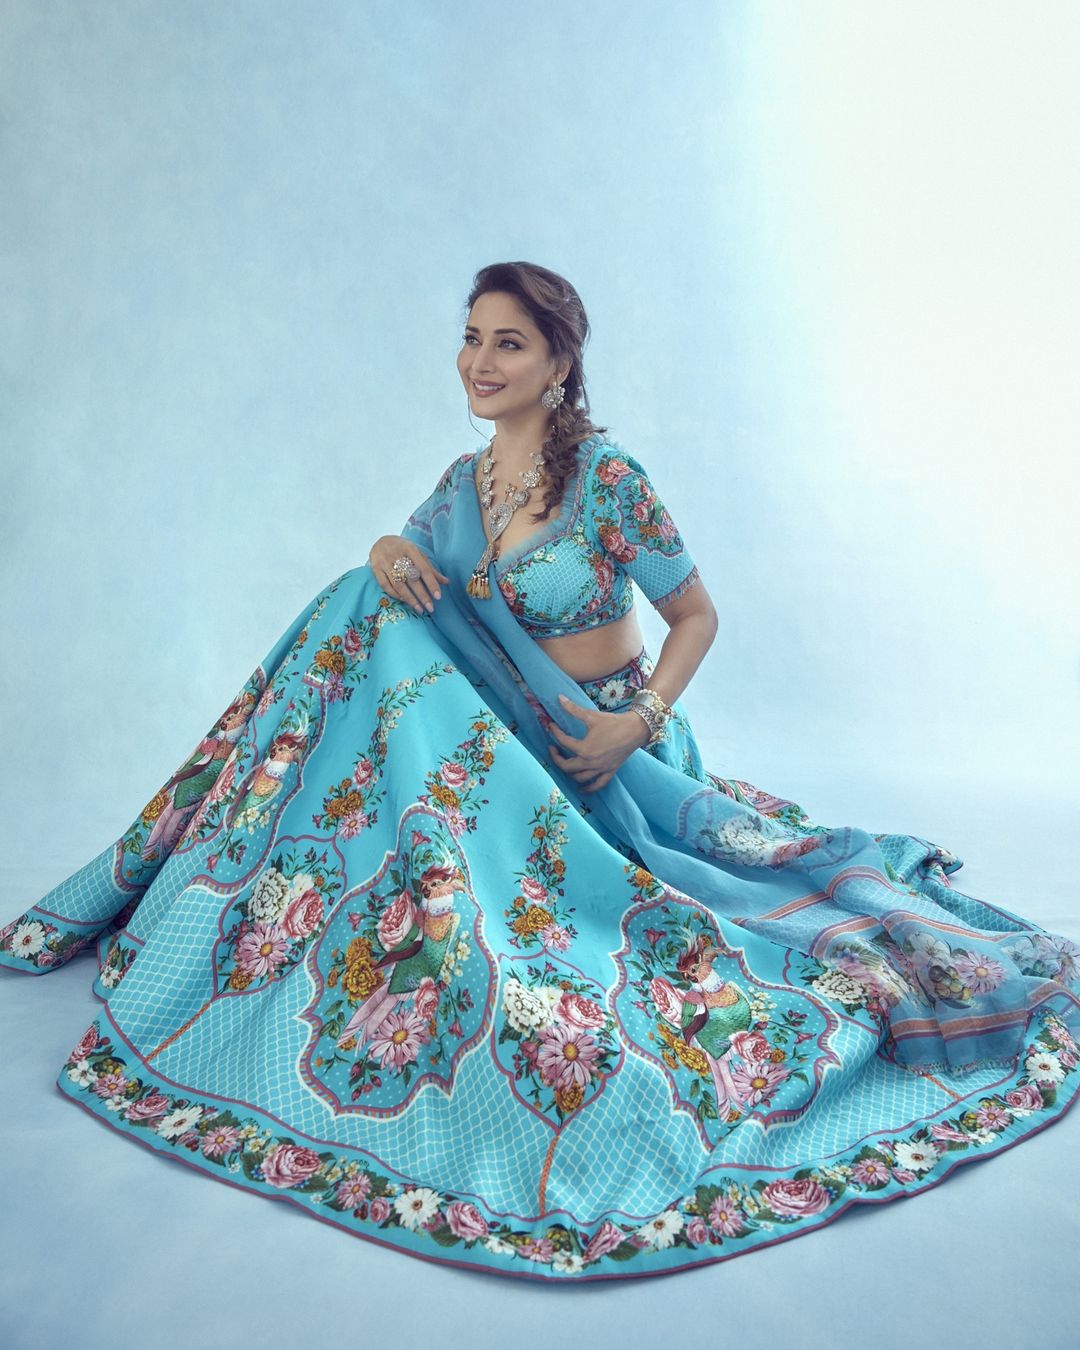 Madhuri Dixit Nene Looks Graceful In Floral Lehenga, See The Diva&#39;s Gorgeous Ethnic Wear Pics